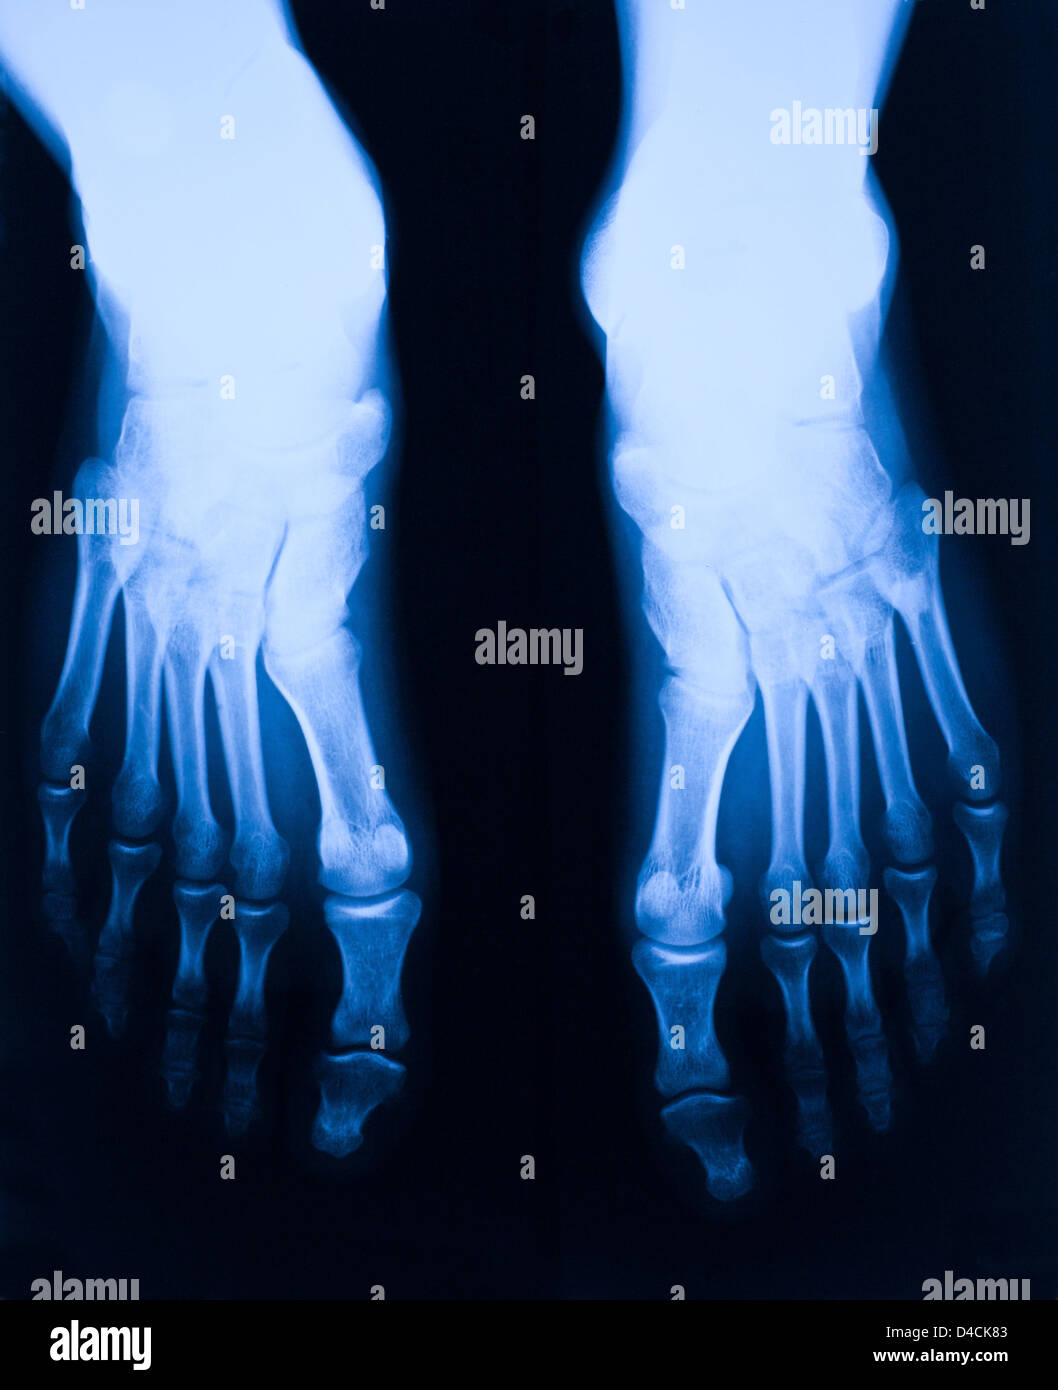 image of blue foot xray Stock Photo